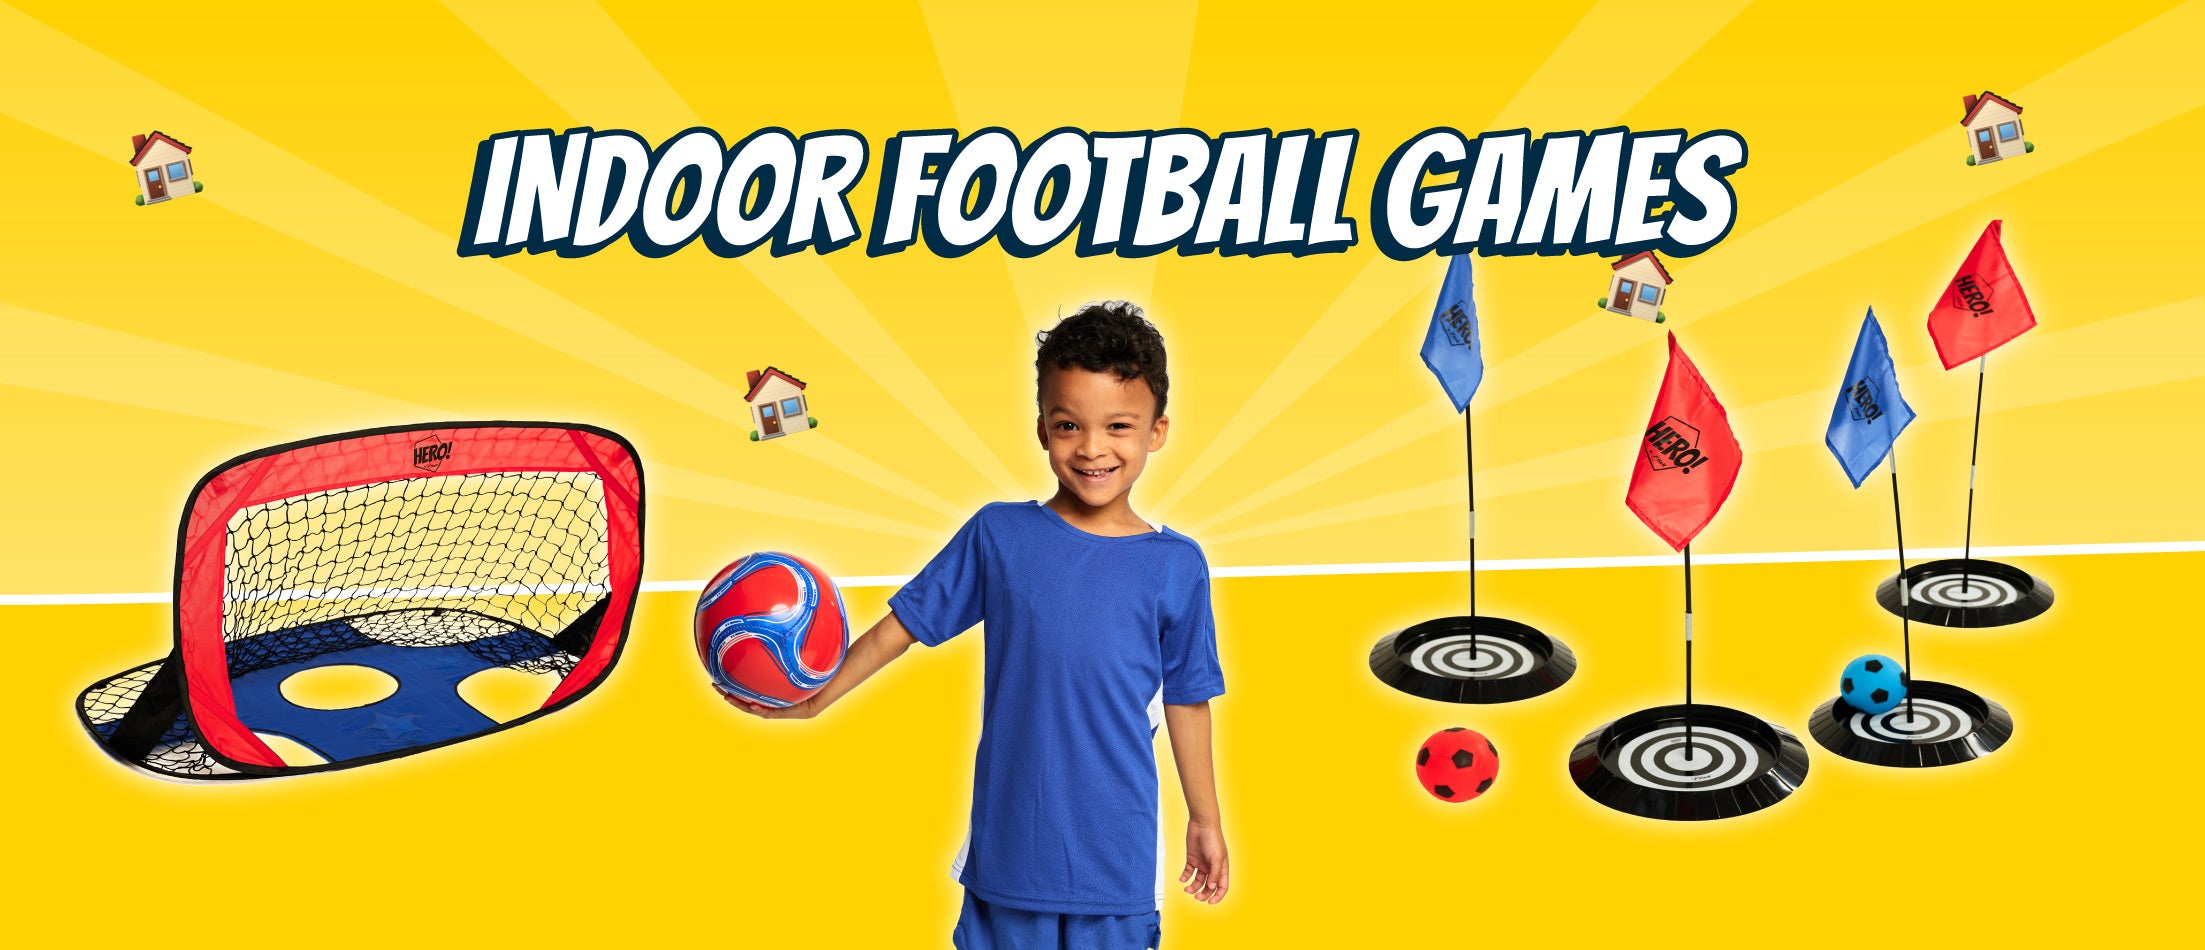 Fun Indoor Football Games to Keep Kids Moving Indoors